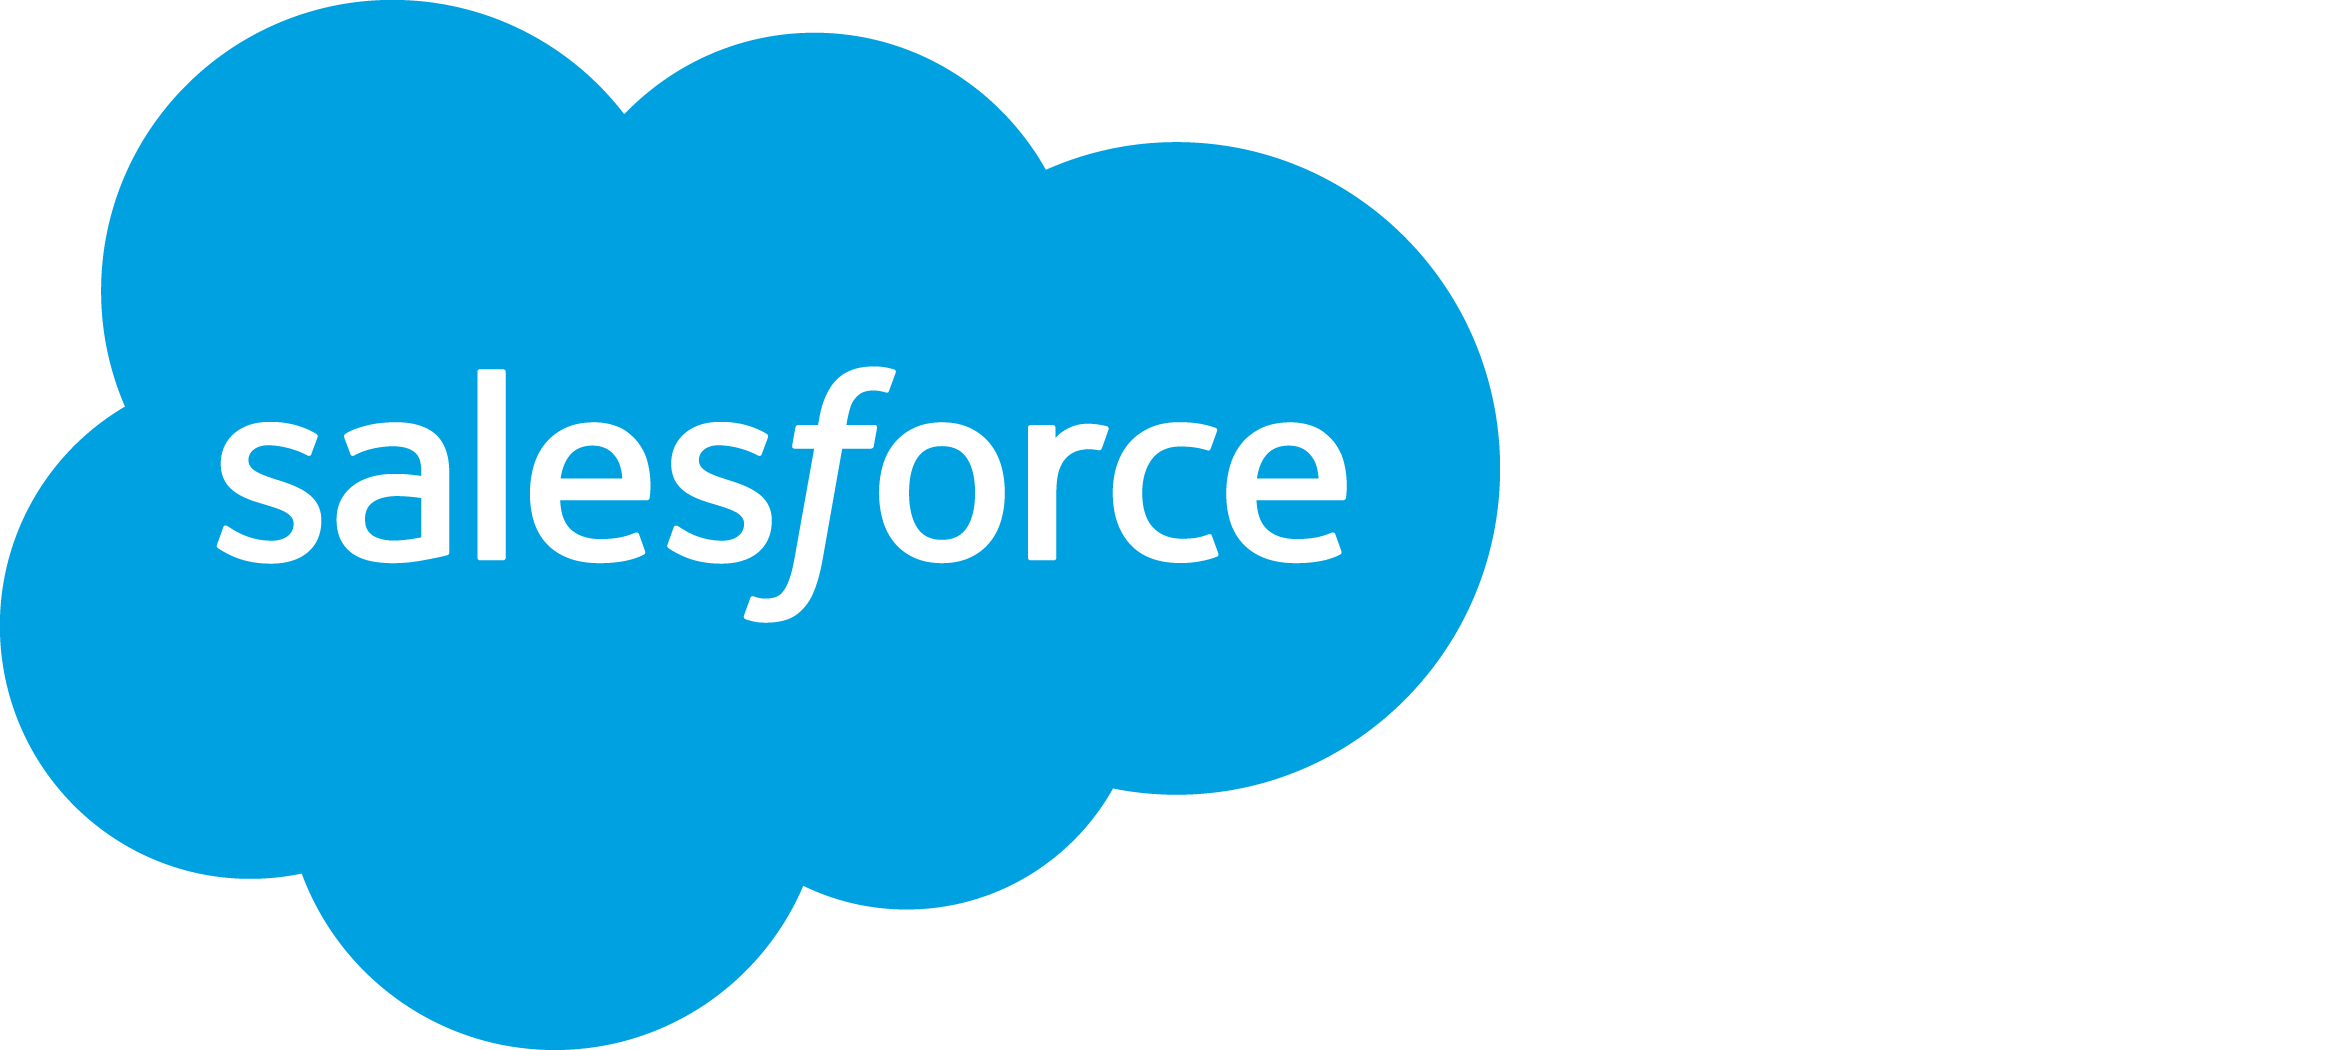 SFDC Logo - Salesforce Logo PNG Transparent Salesforce Logo.PNG Images. | PlusPNG